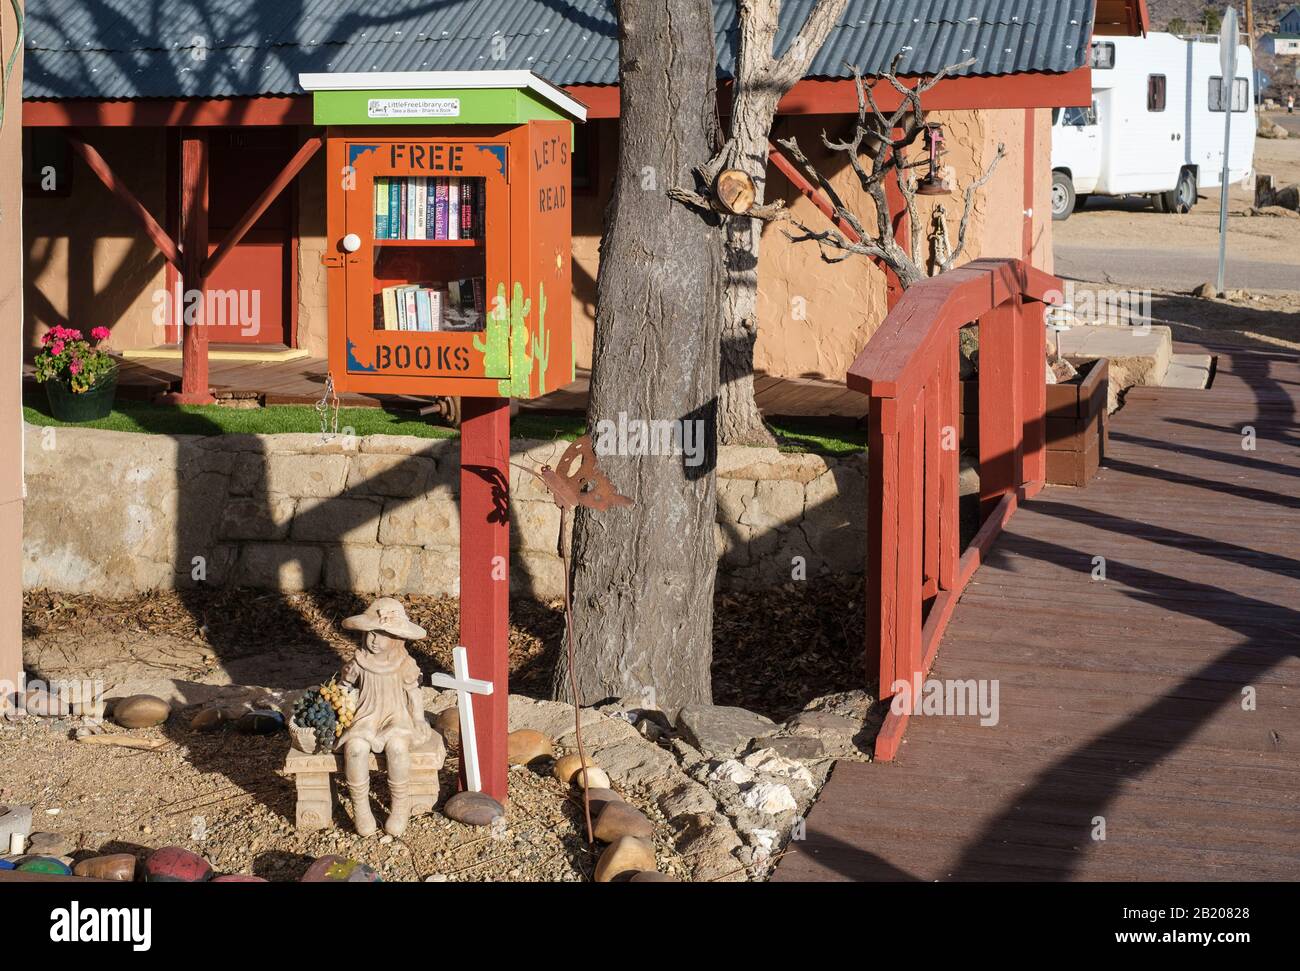 Free book box library outside Shep's Miners Inn & Yesterdays Restaurant Chloride, Arizona, 86431, USA. Stock Photo